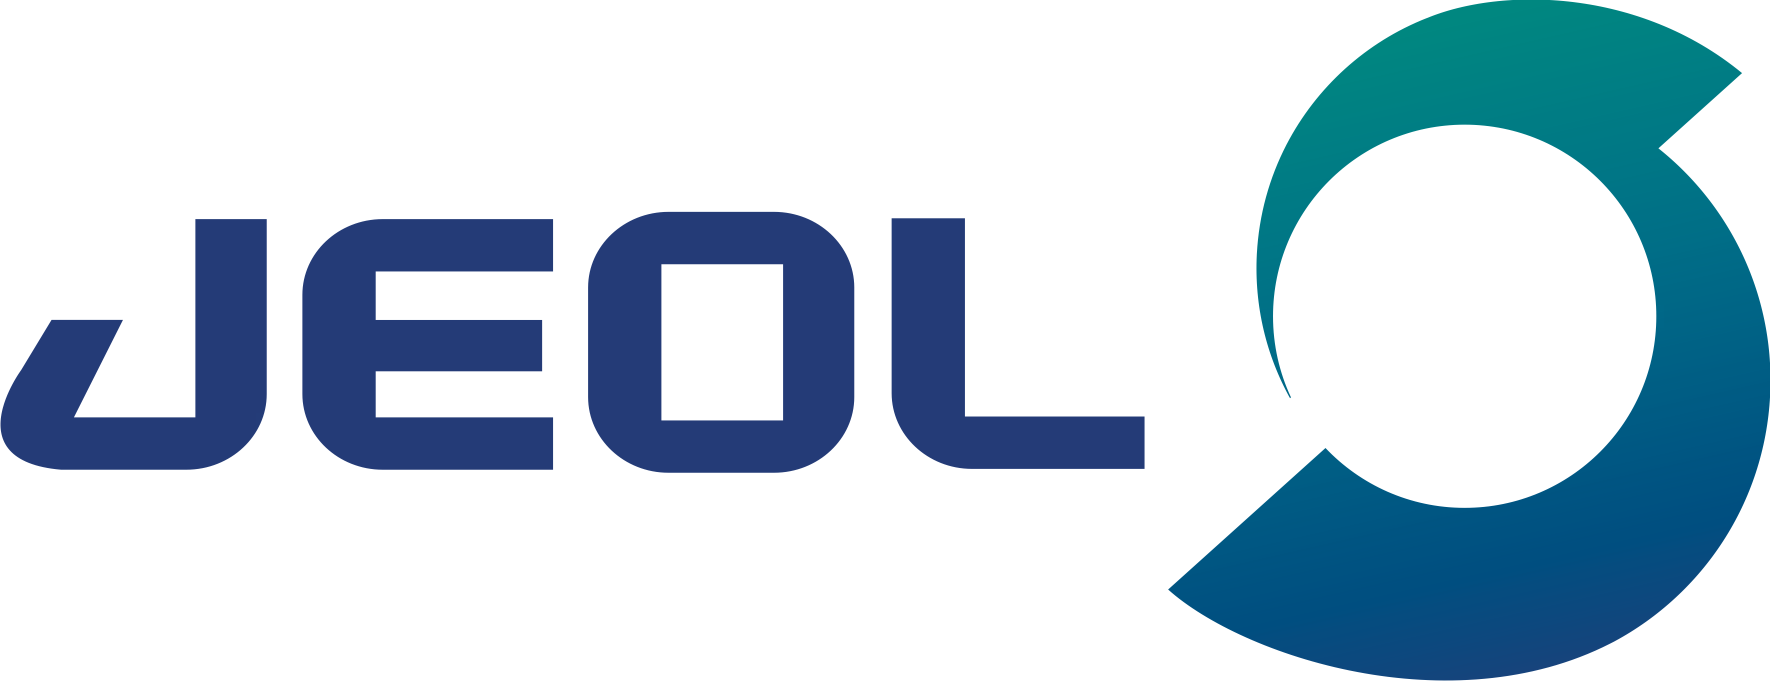 loading joel logo